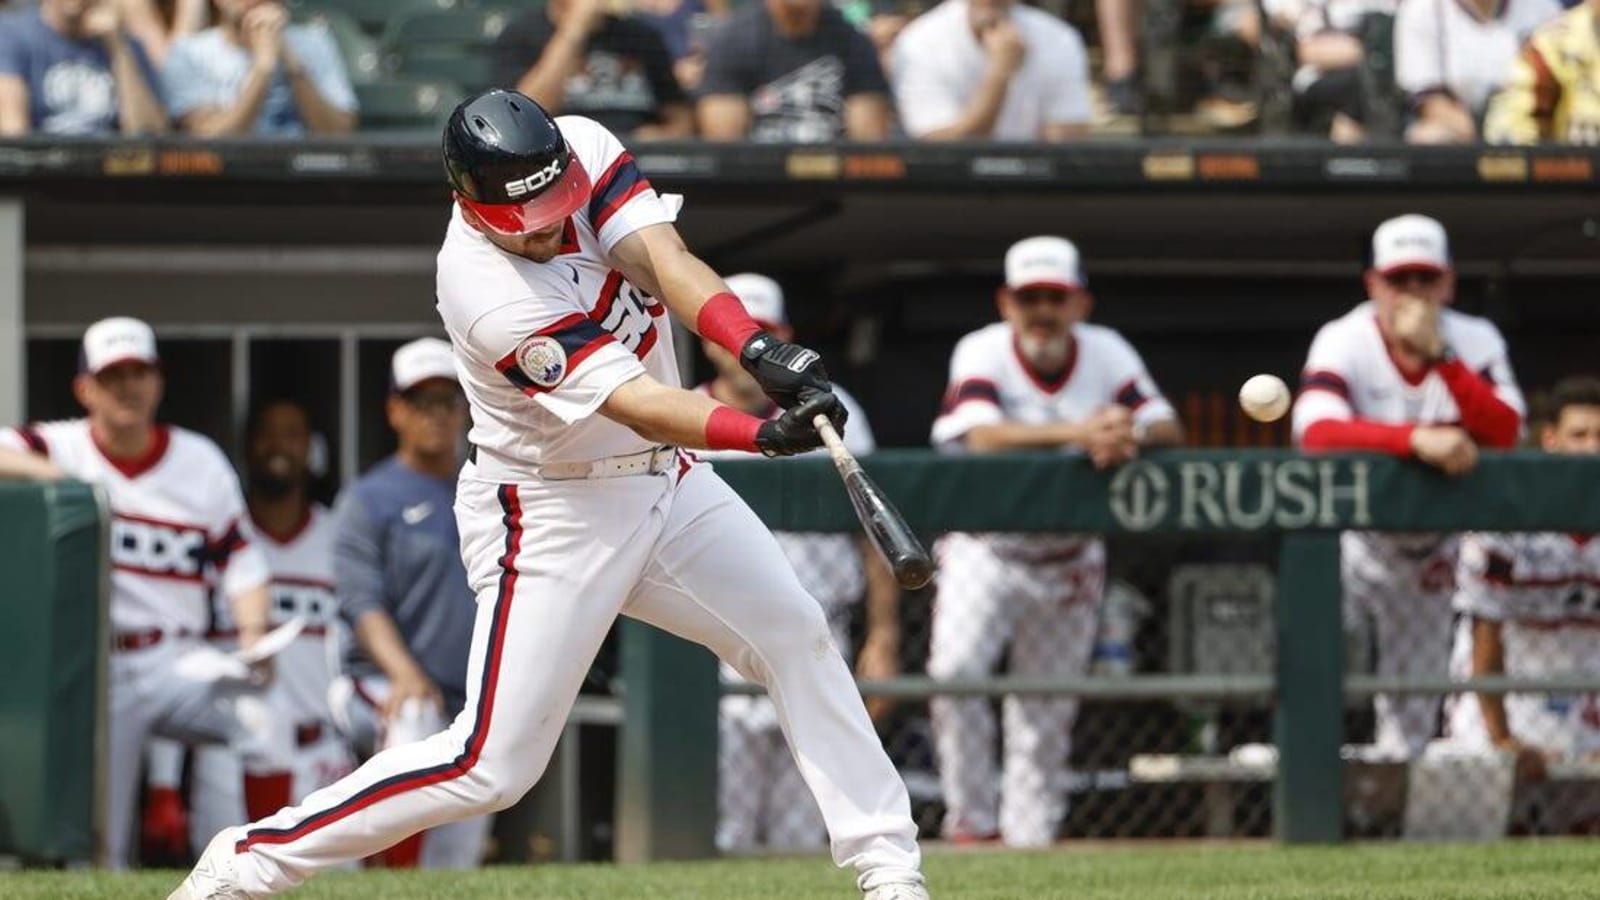 Jake Burger's walk-off grand slam gives White Sox sweep of Tigers